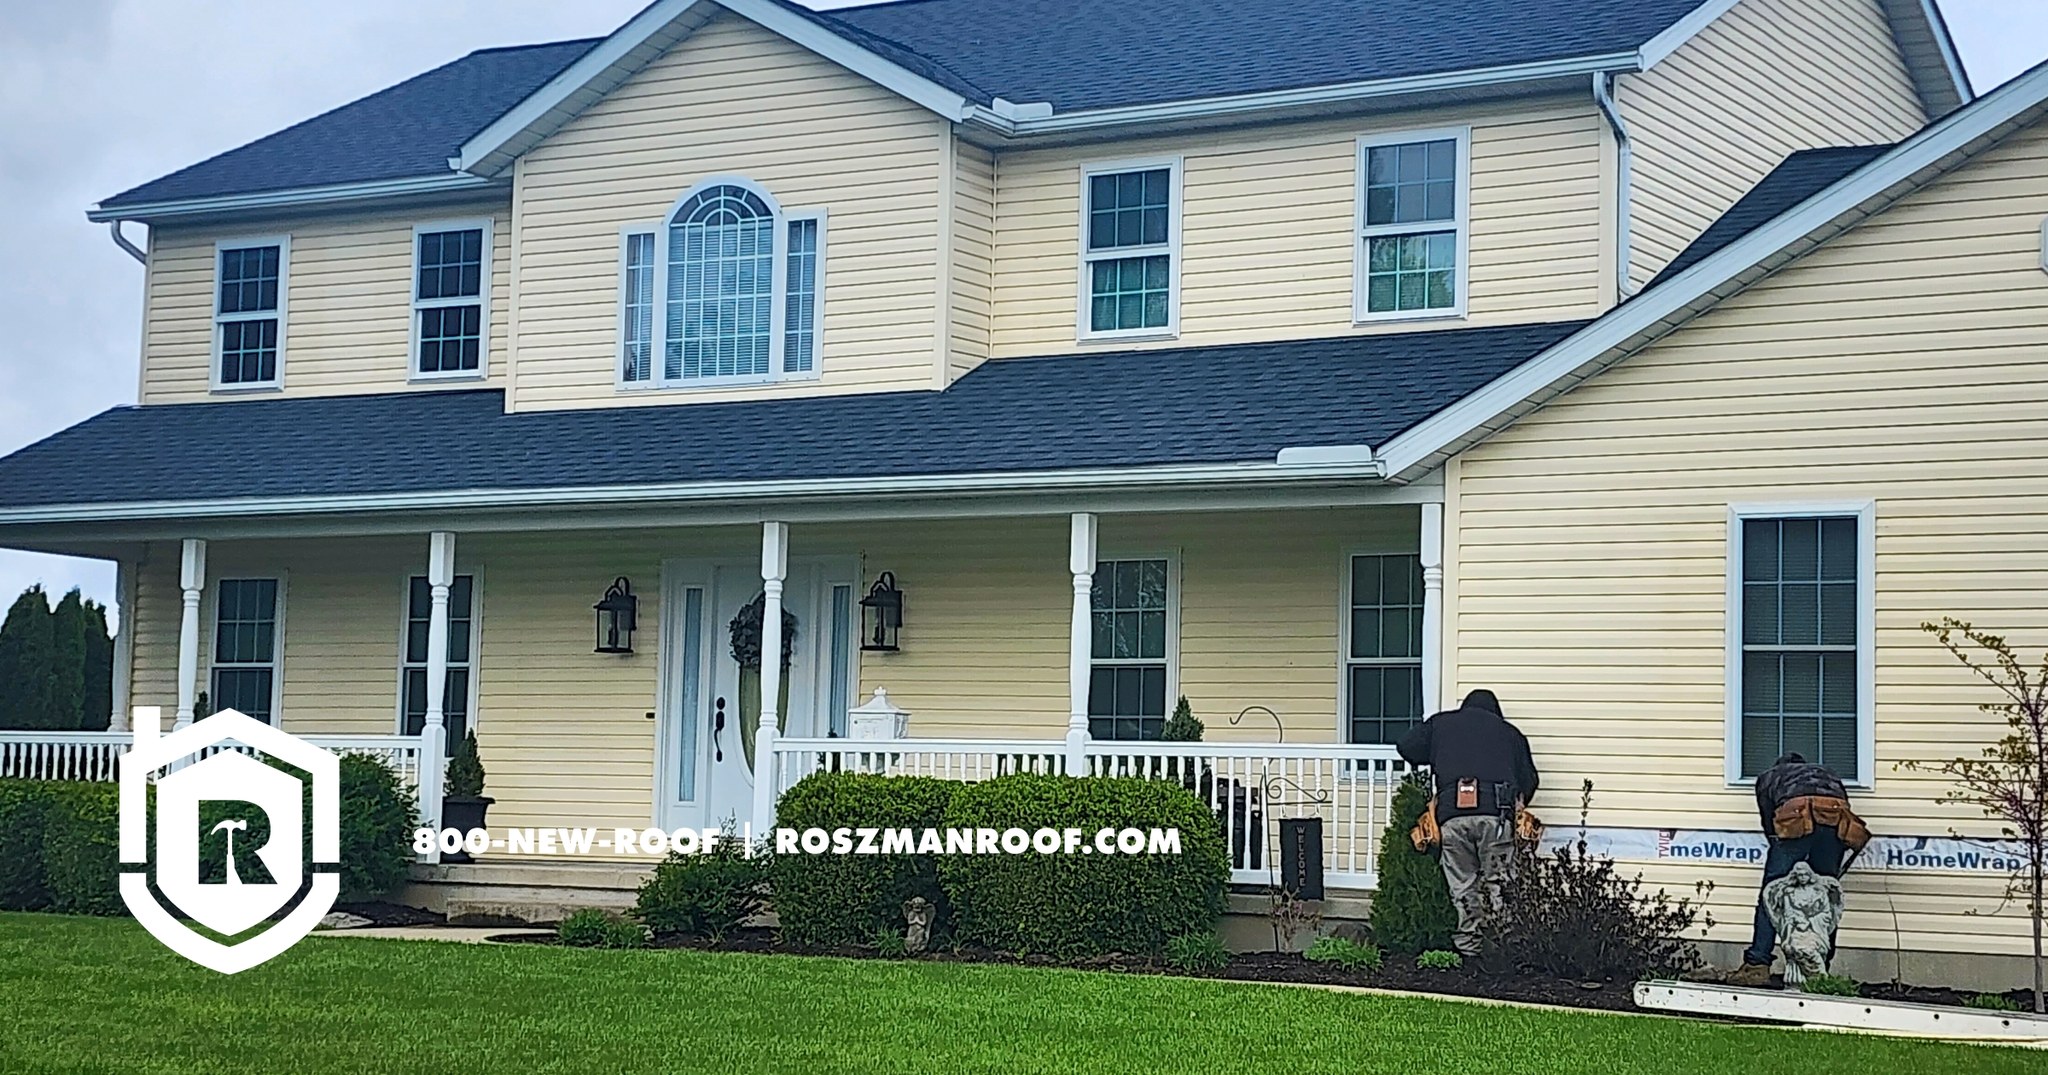 Roszman Roofing & Remodeling Inc Q123 Co Rd 1, McClure Ohio 43534